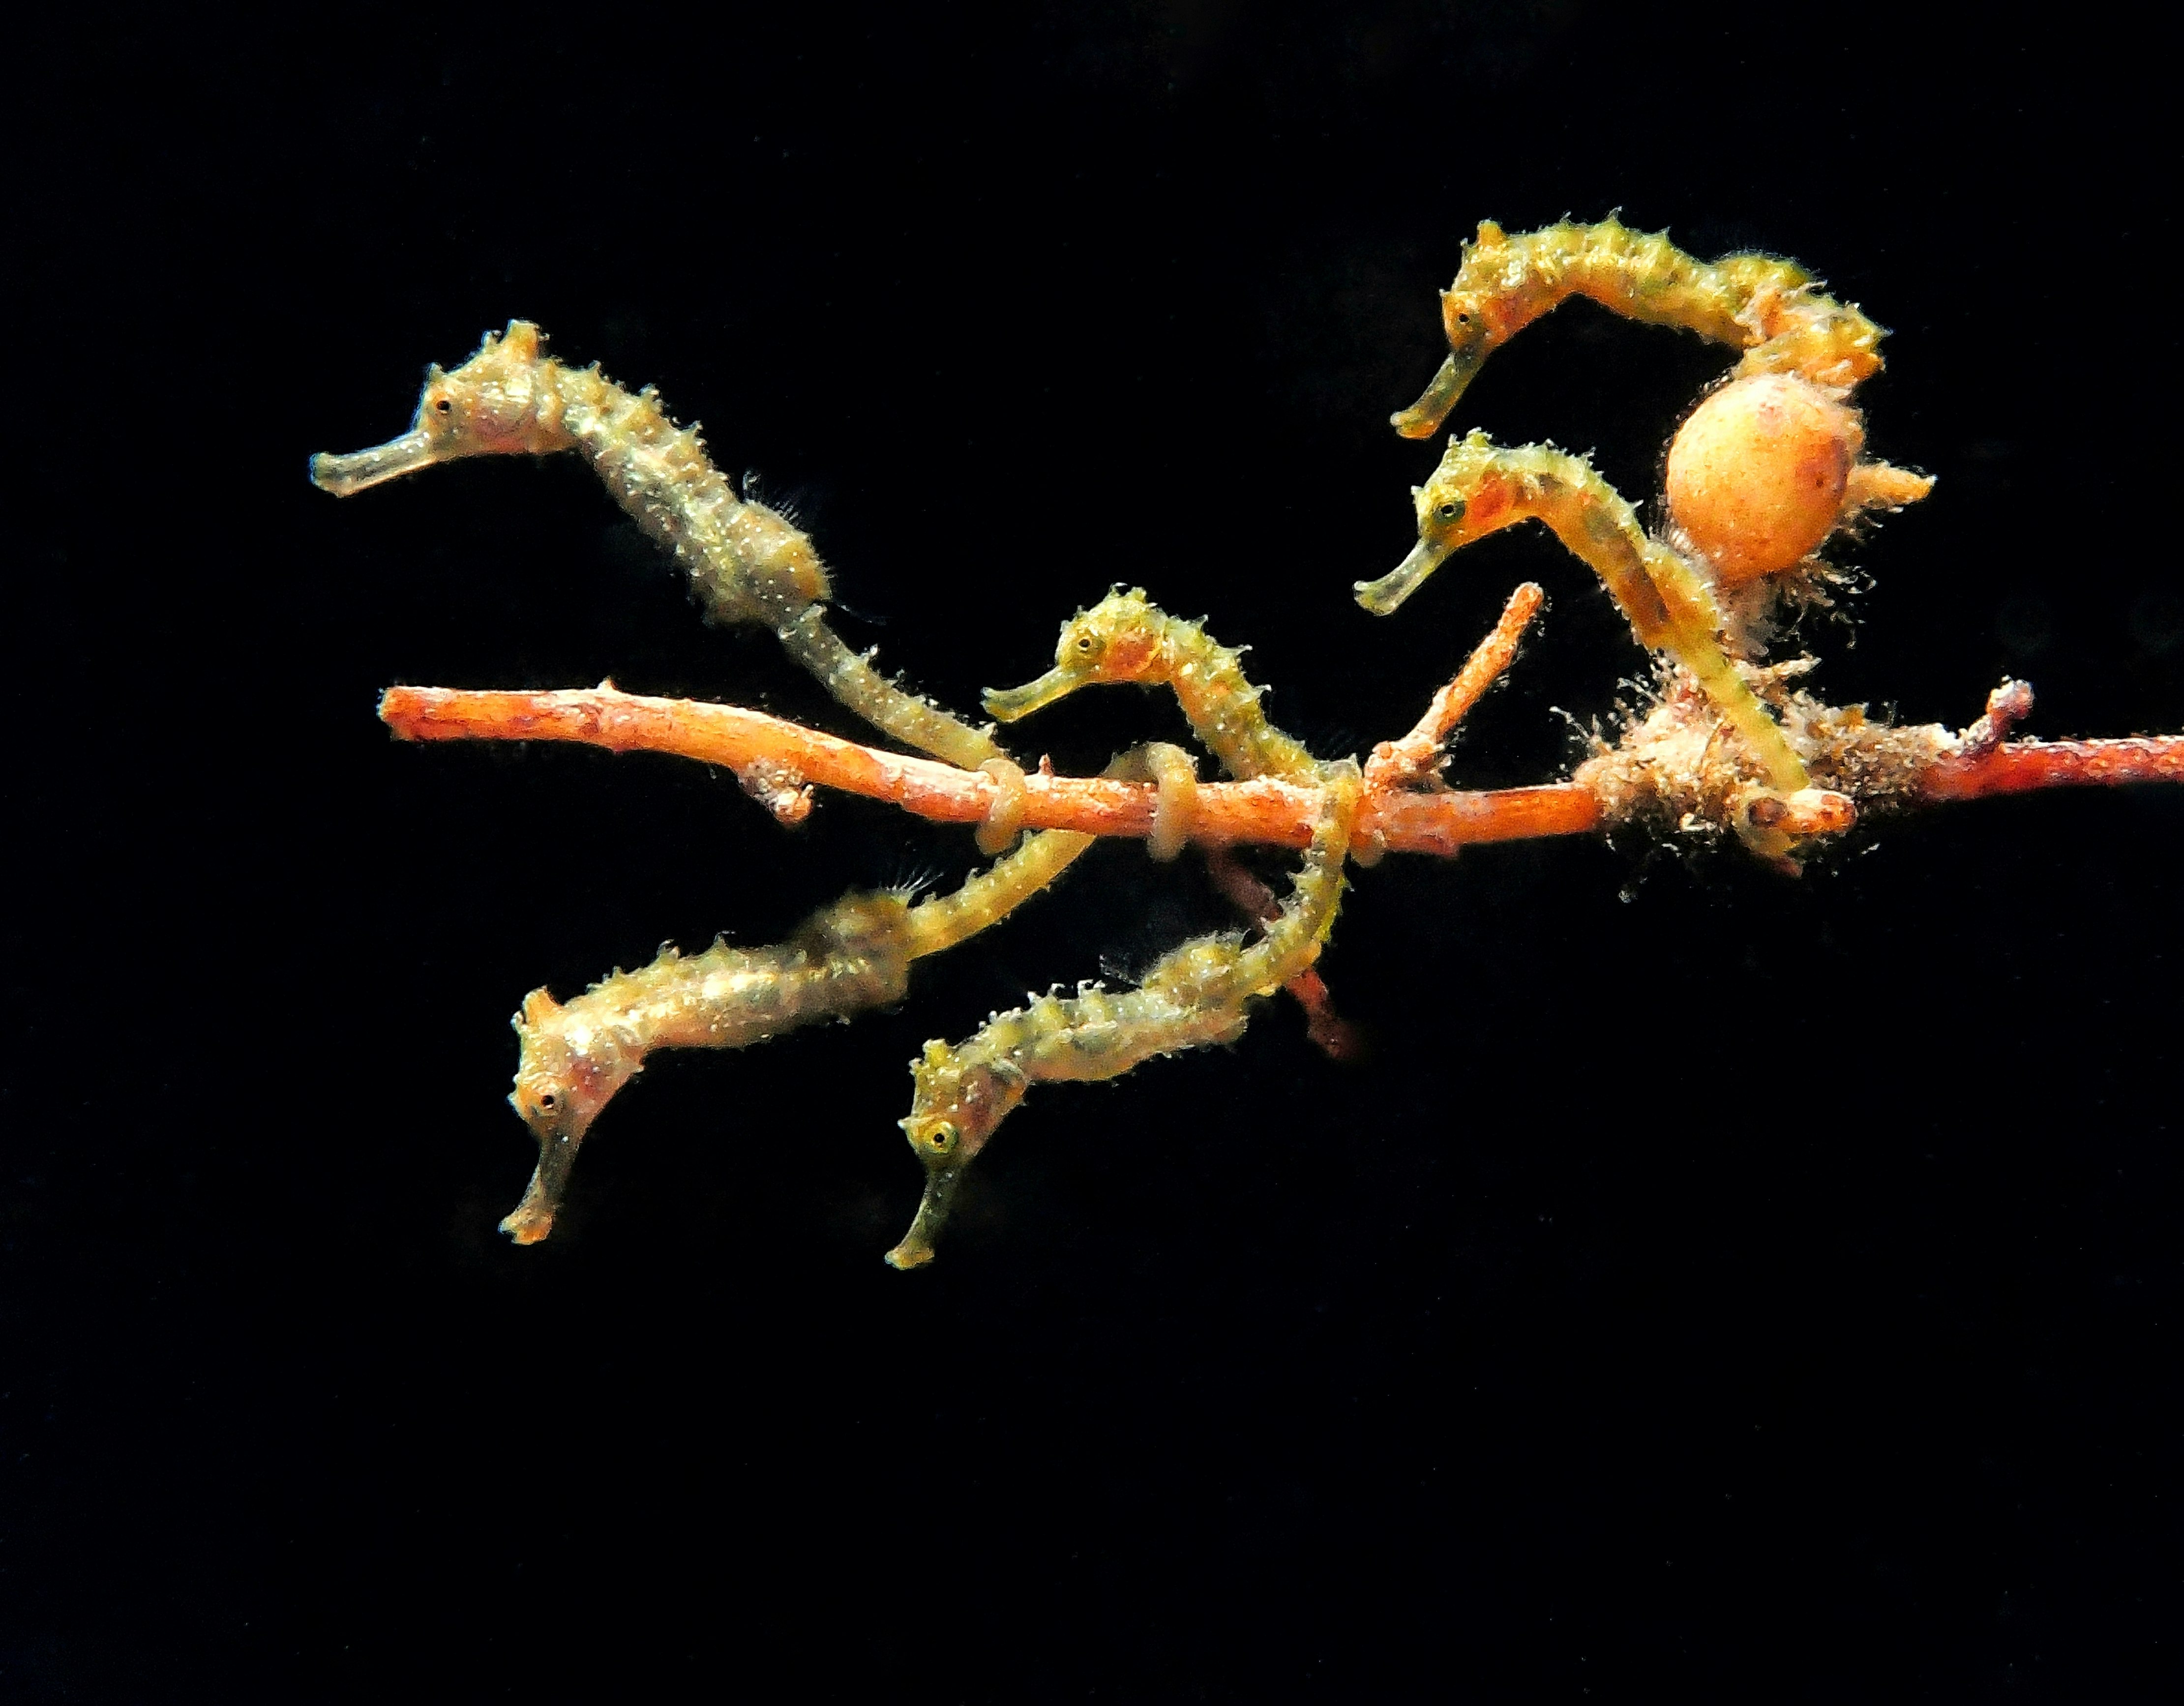 Six juvenile seahorses